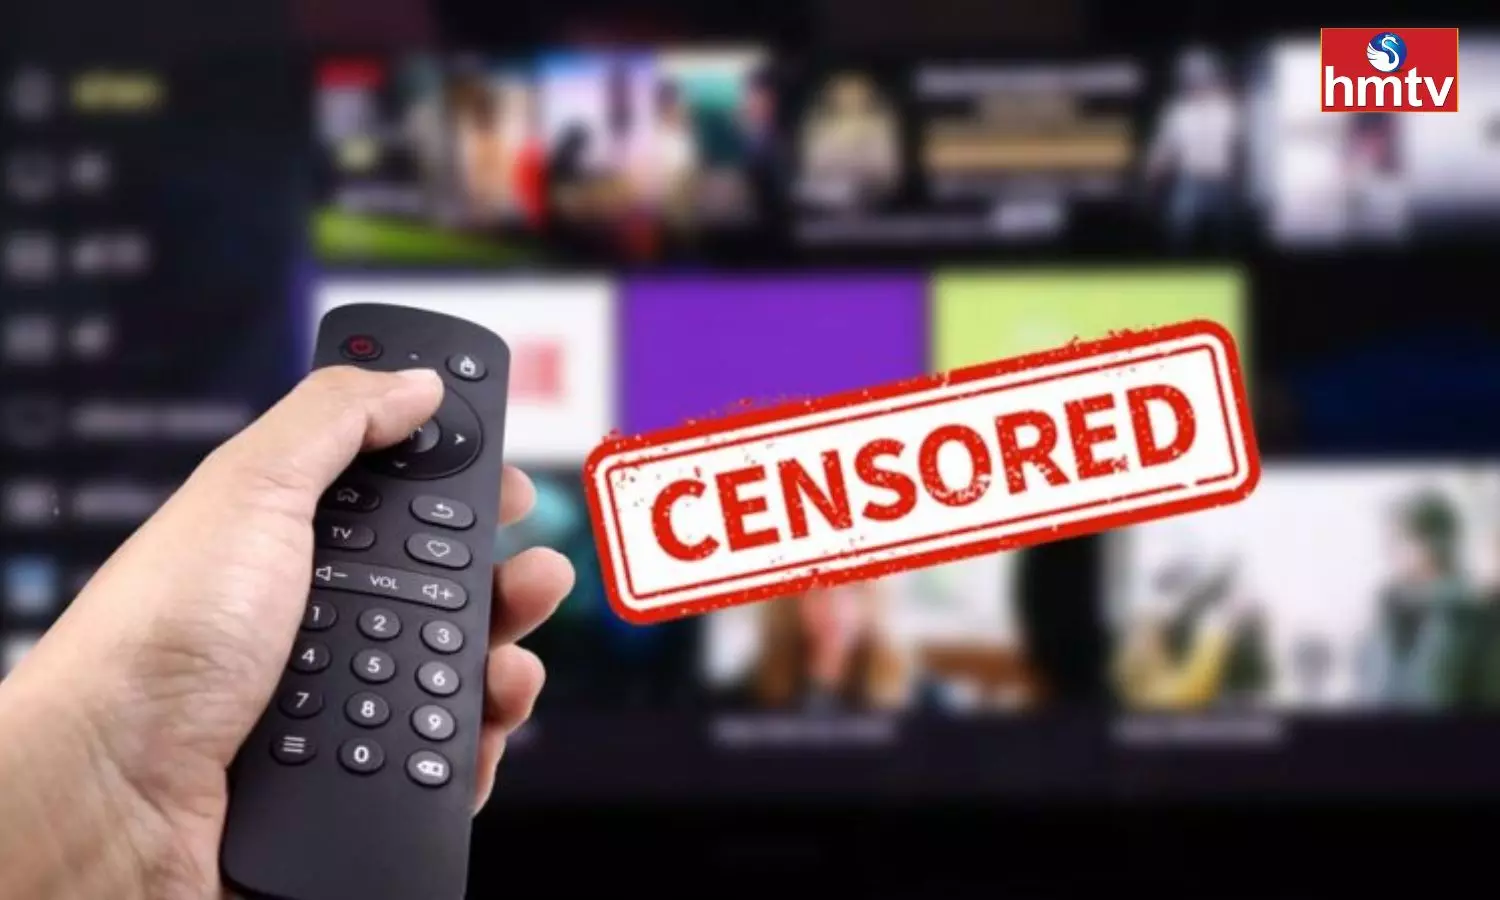 New Broadcasting Services Bill for OTT Platforms like Amazon Prime, Netflix, Disney Hotstar Will Soon Come Under Censorship